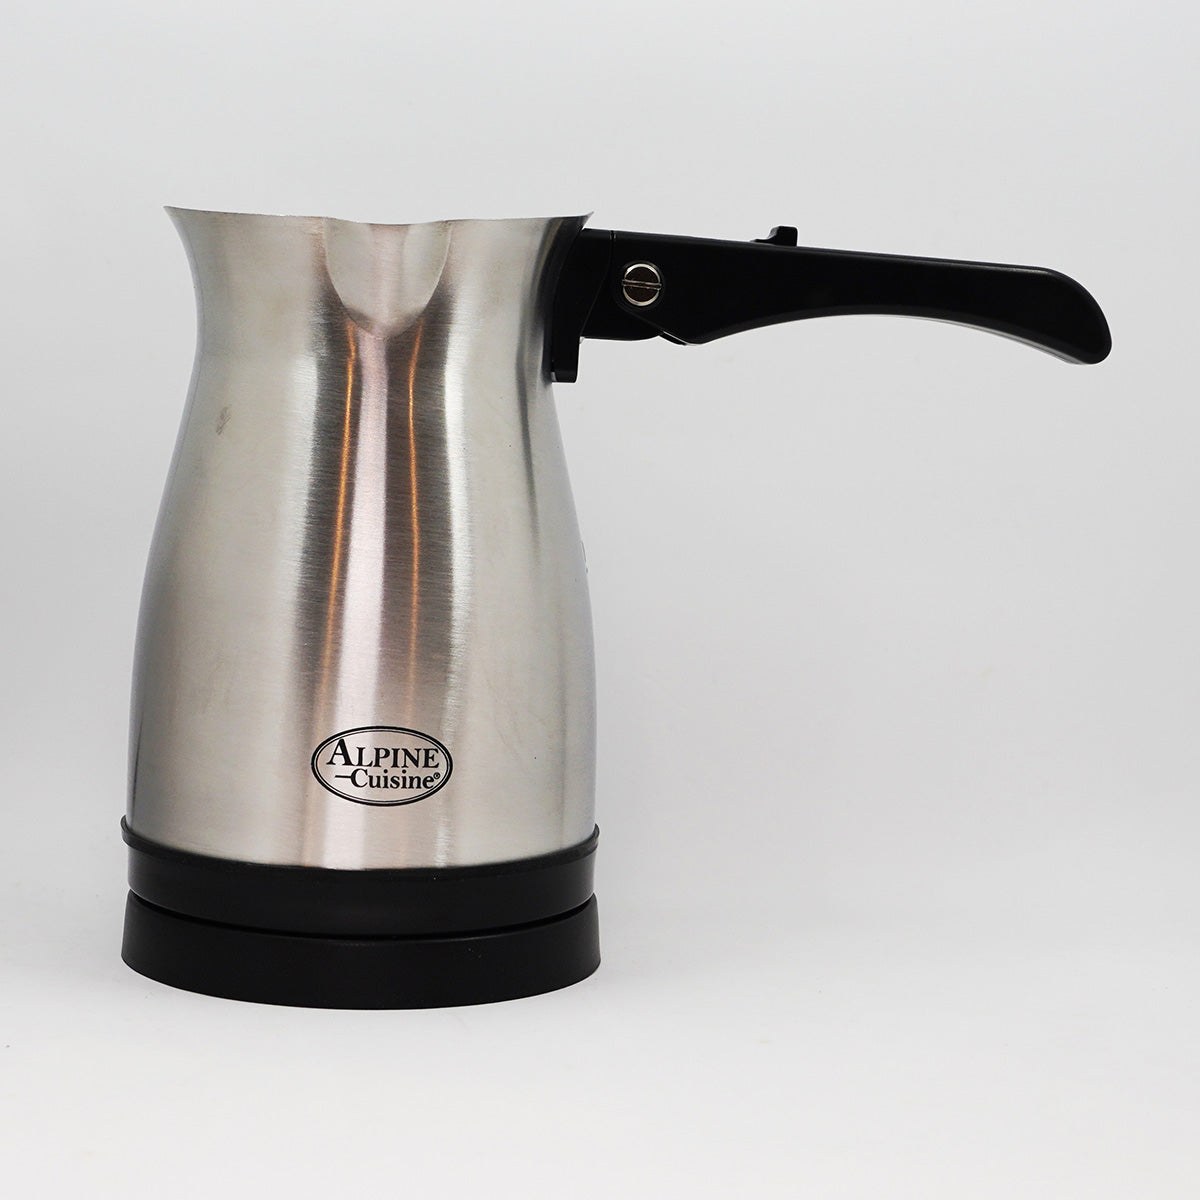 SENSEMAKE Electric Percolator Coffee Maker, Stainless Steel, Quick